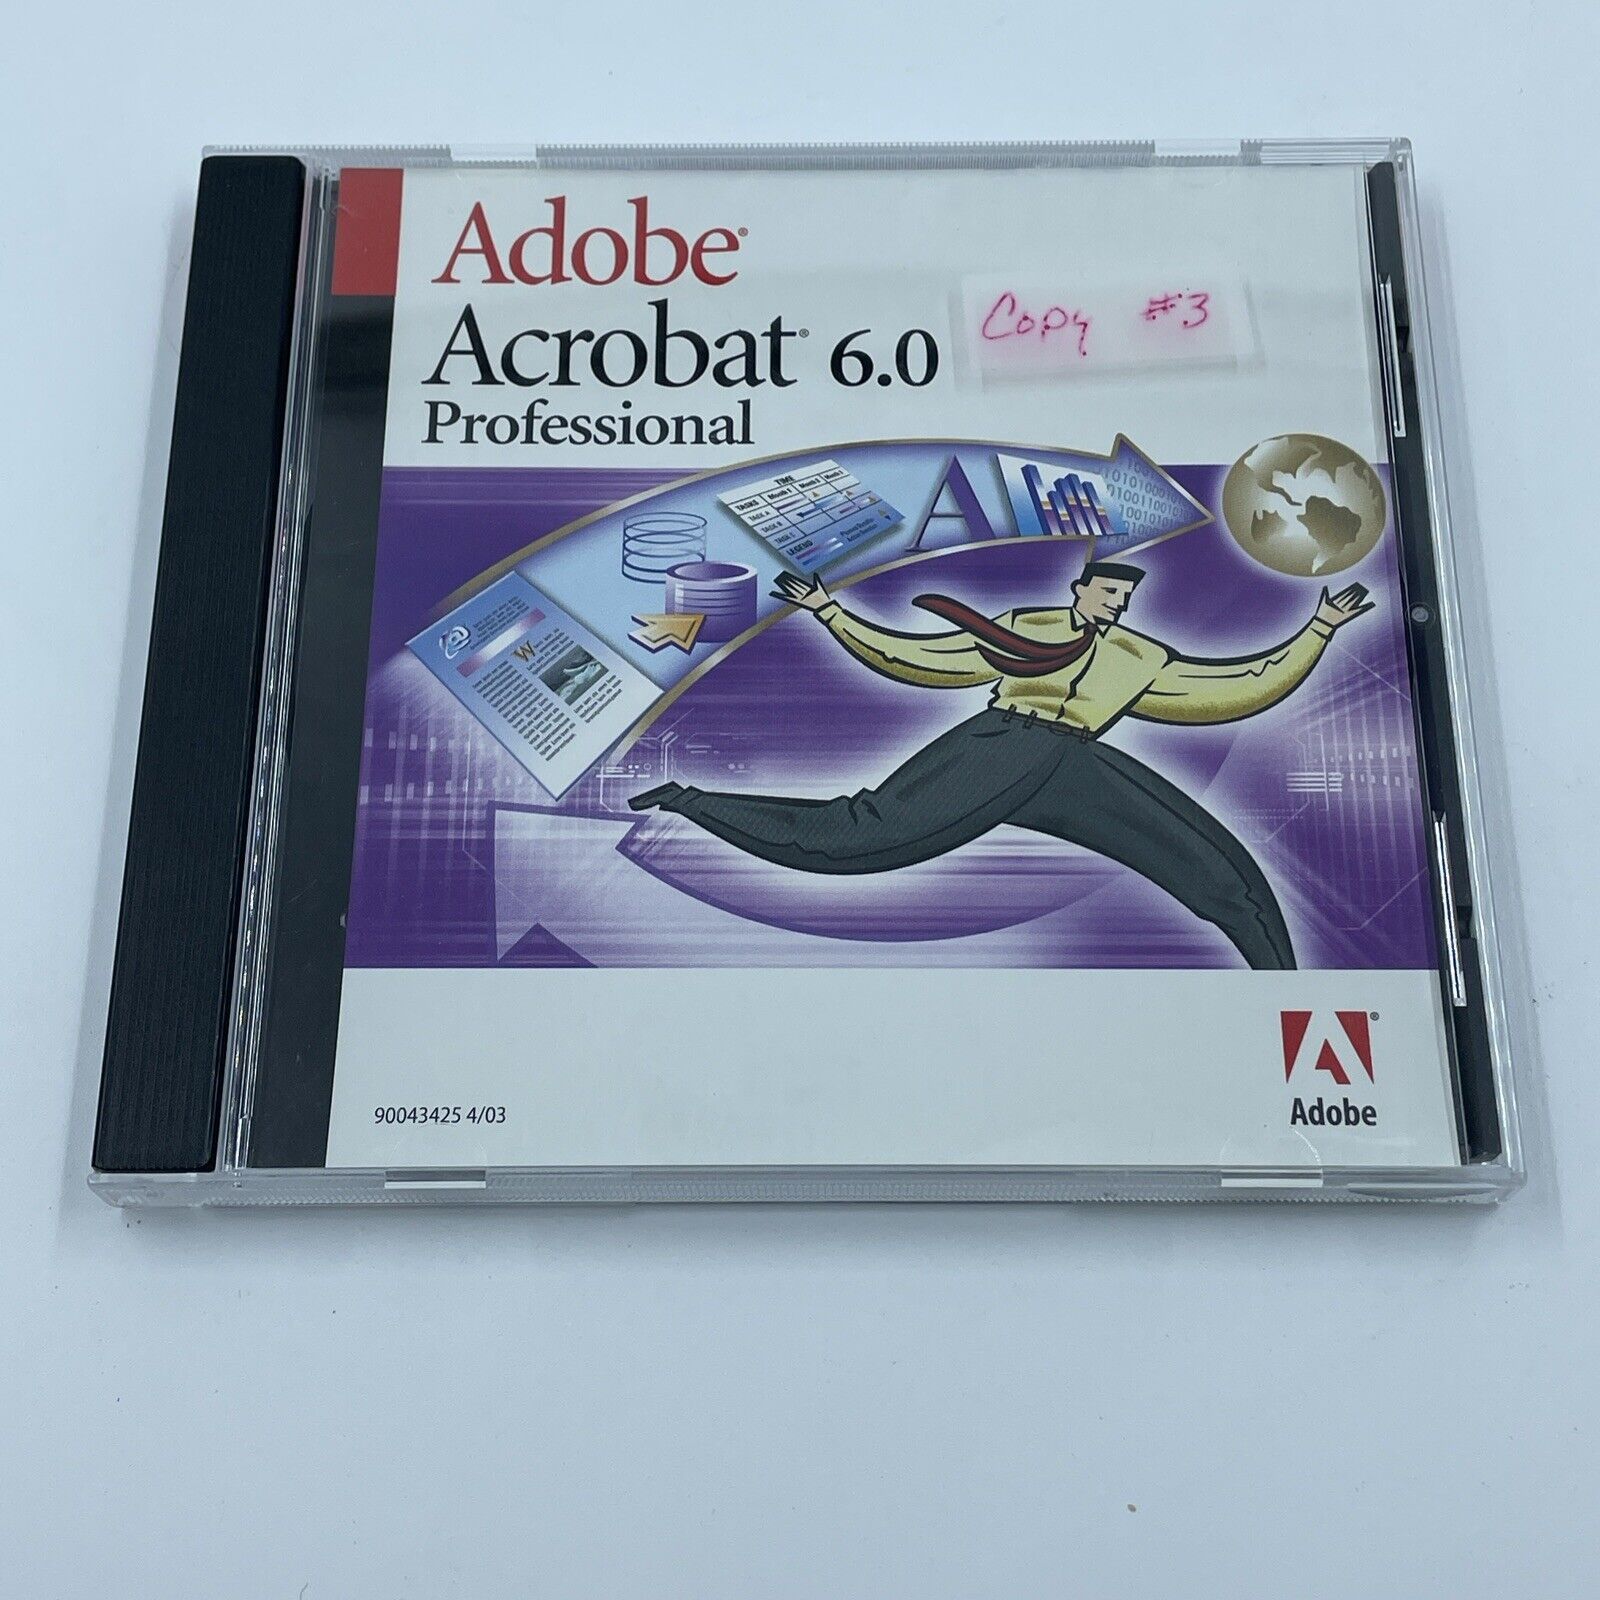 Adobe Acrobat 6.0 Professional Upgrade Windows Software - Used w/Product Key